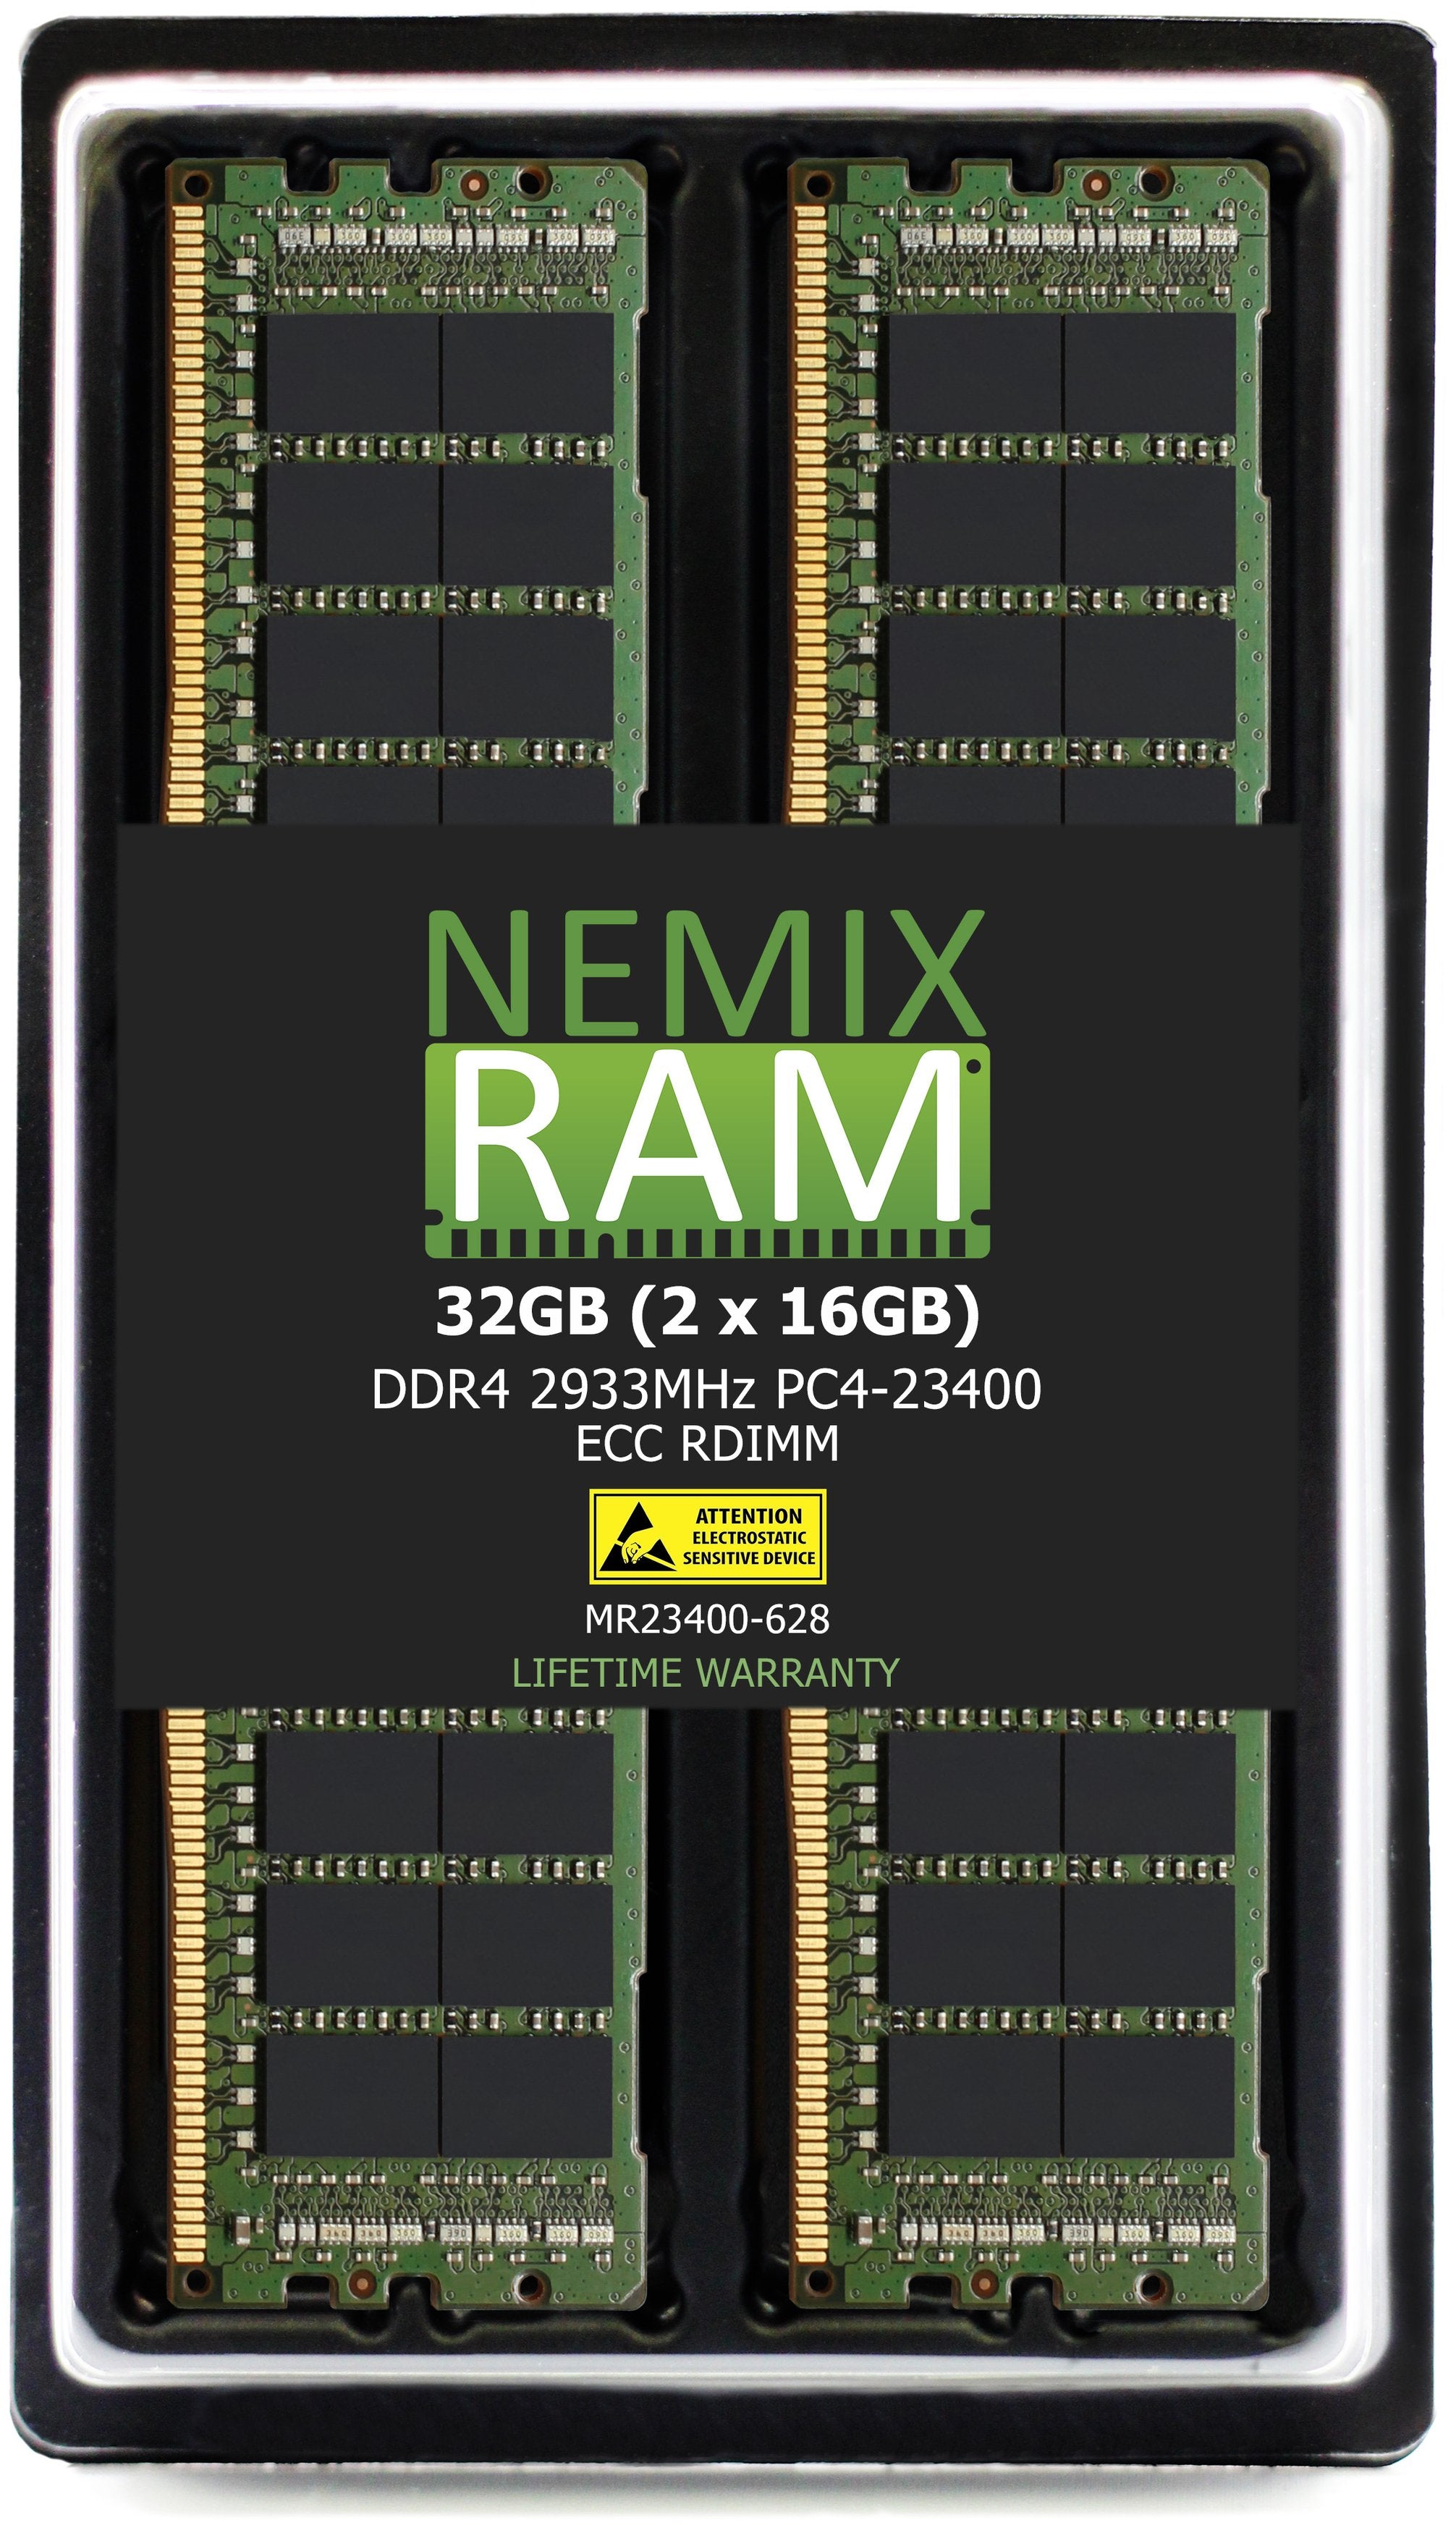 DDR4 2933MHZ PC4-23400 RDIMM 2RX8